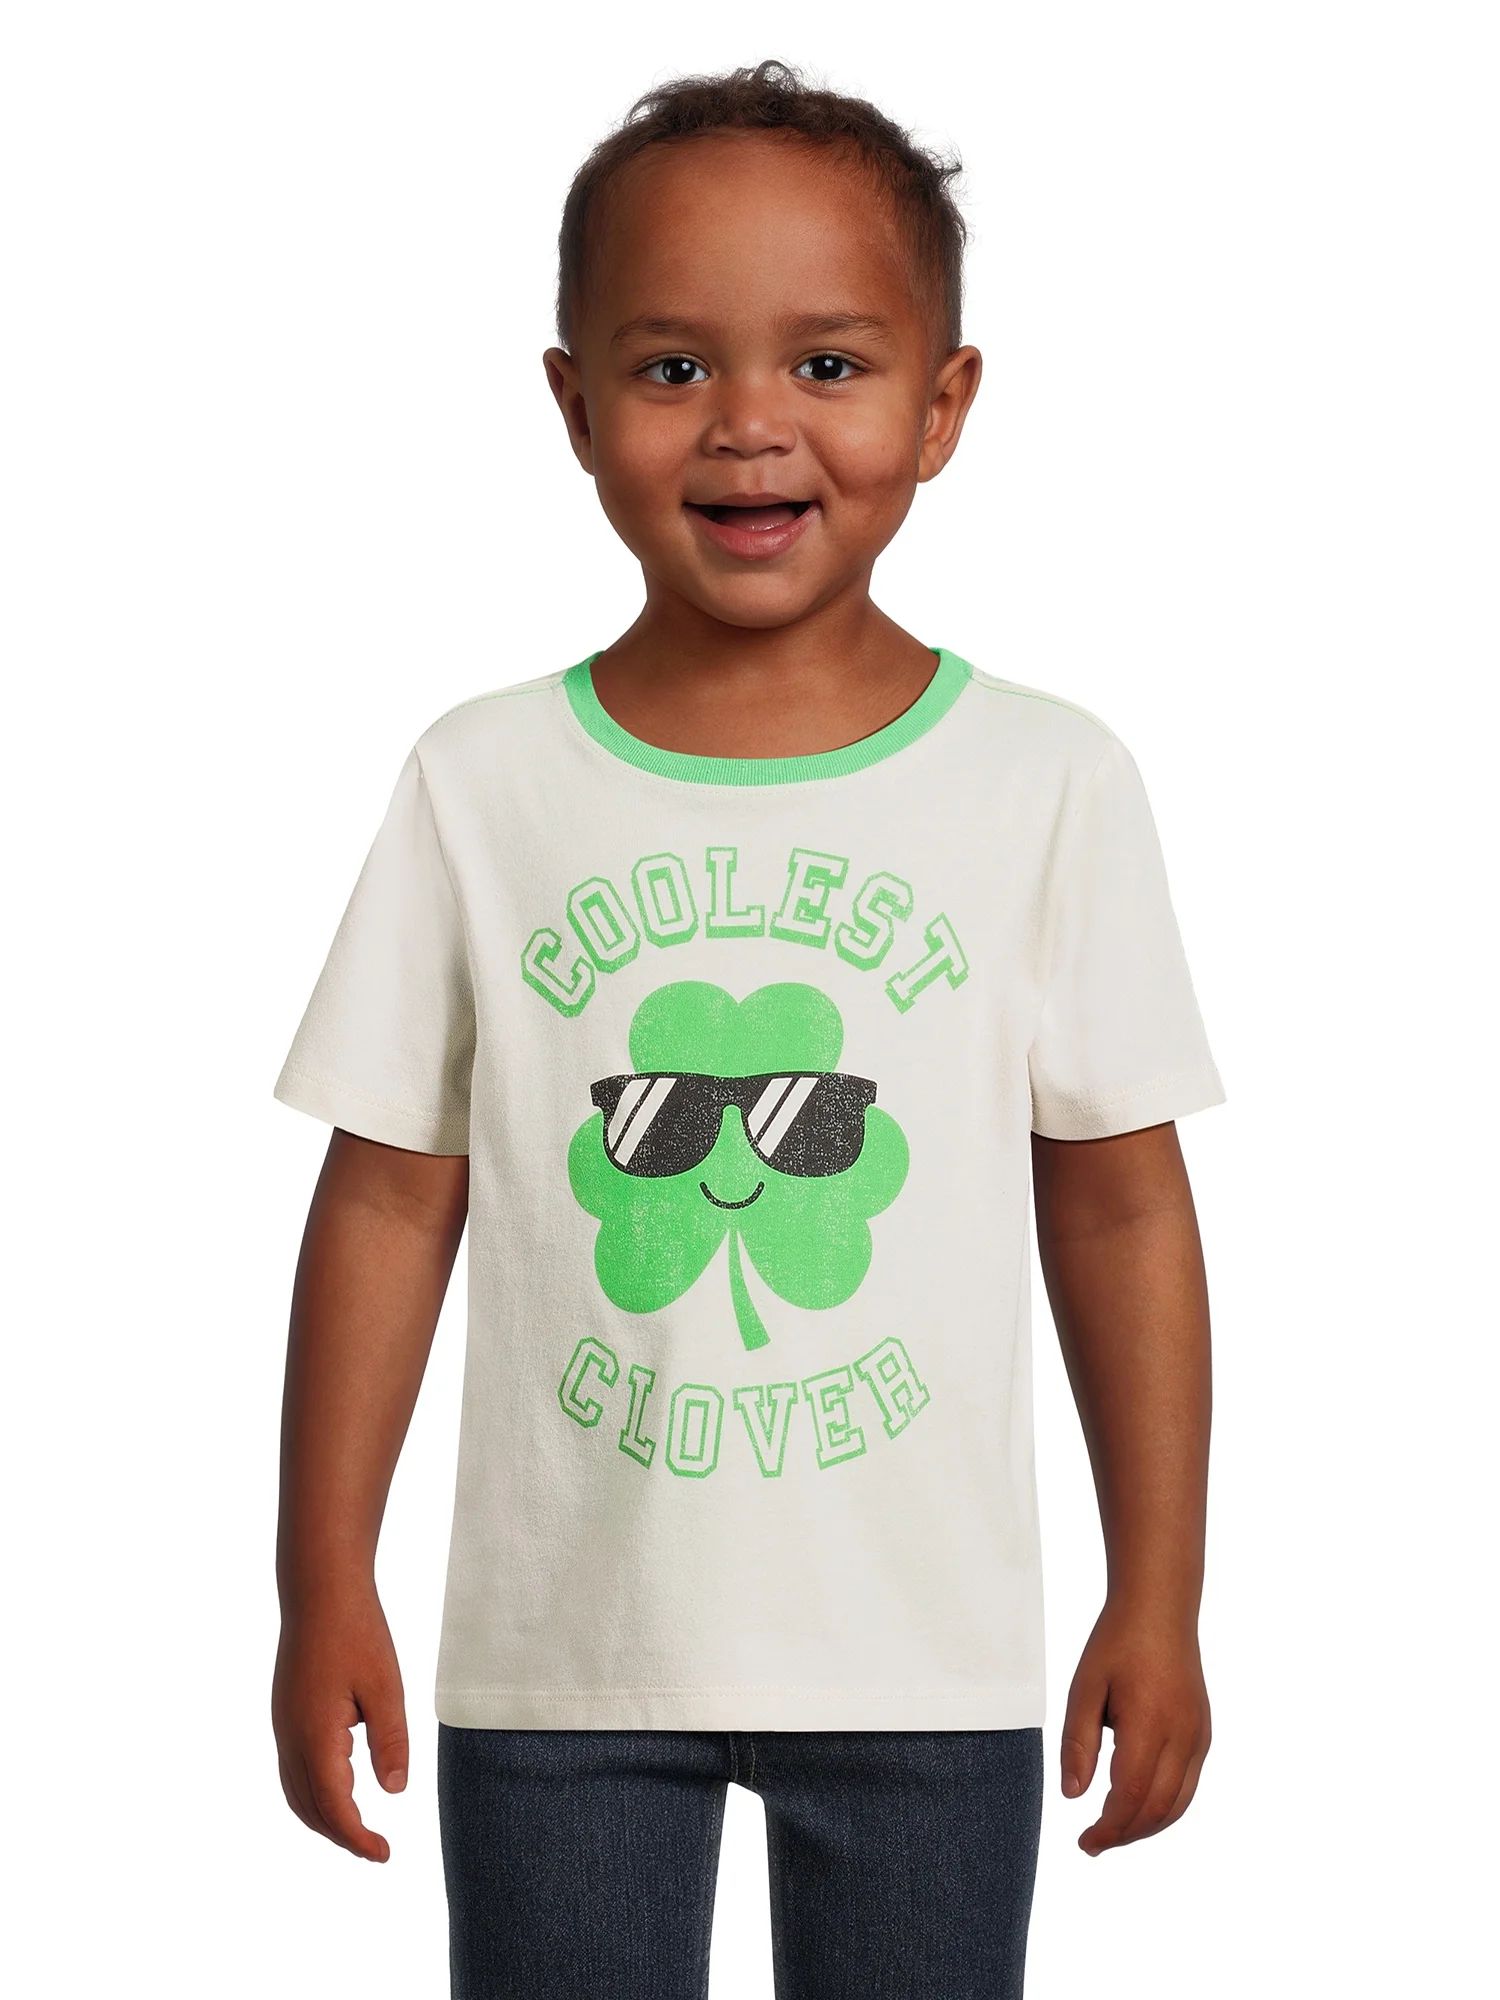 Wonder Nation St. Patrick's Day Toddler Short Sleeve Graphic Tee, Sizes 12M-5T | Walmart (US)